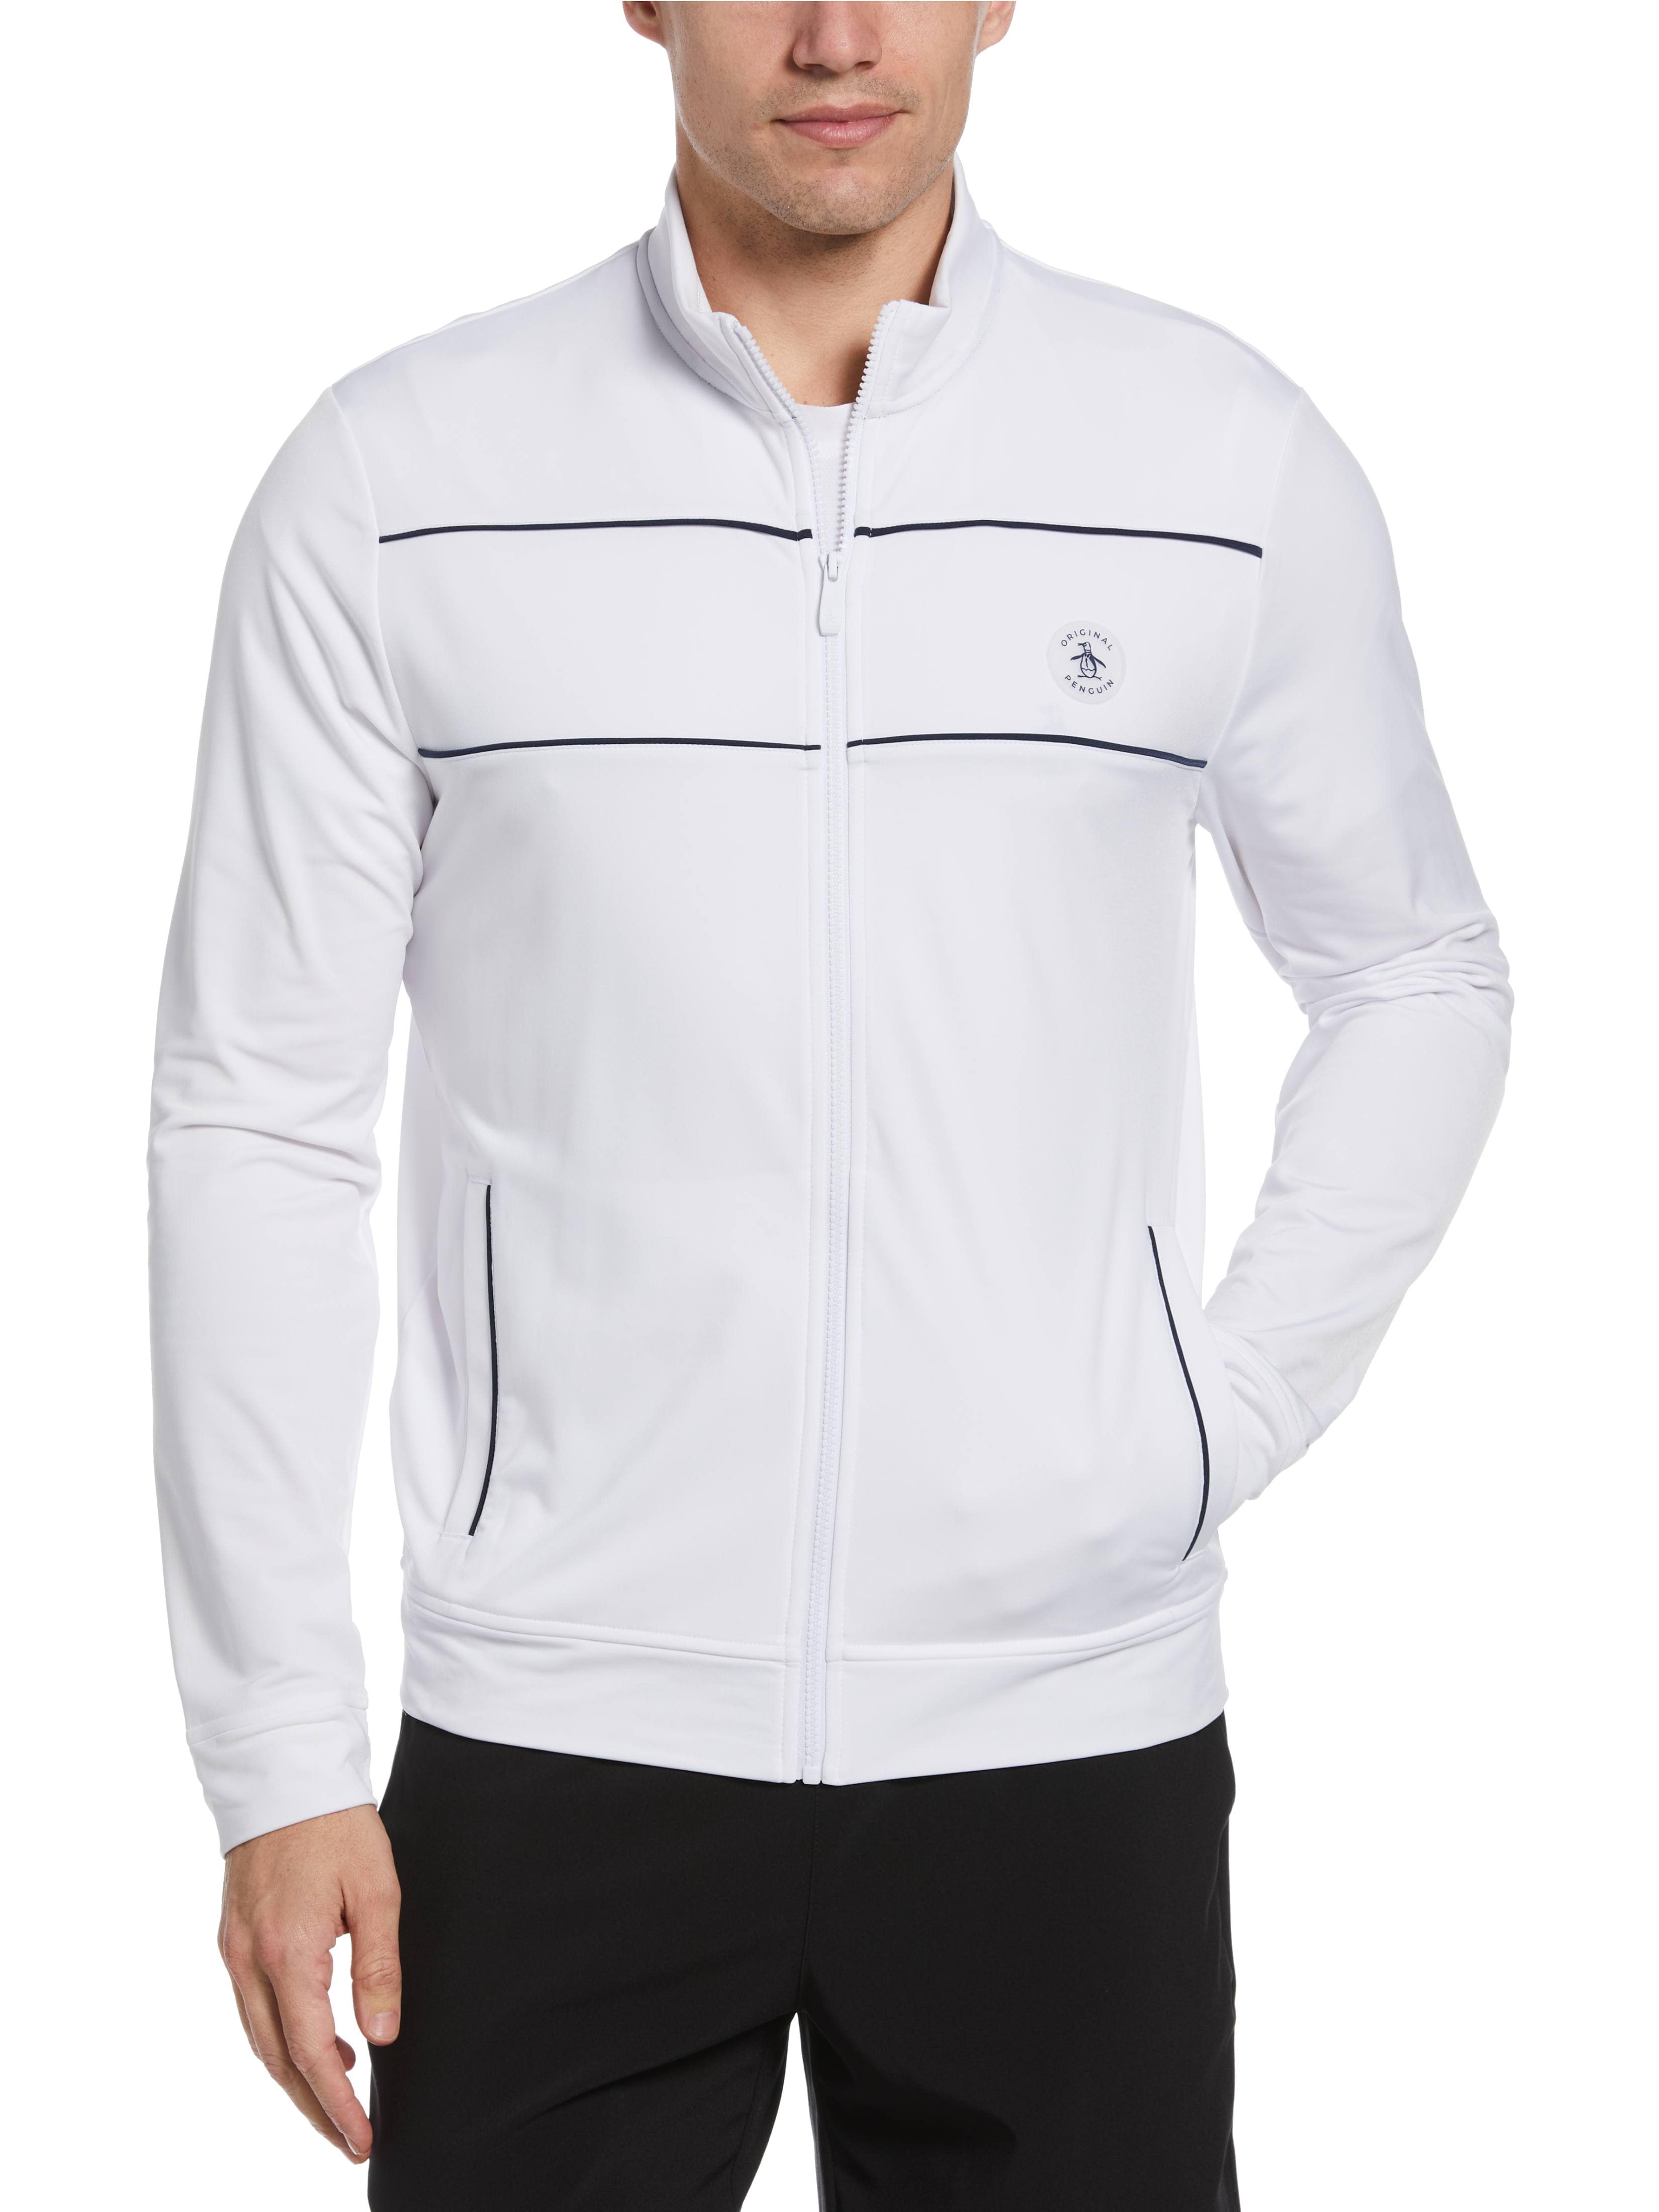 Original Penguin Mens Essential Tennis Track Jacket Top, Size Small, White, Polyester/Elastane | Golf Apparel Shop